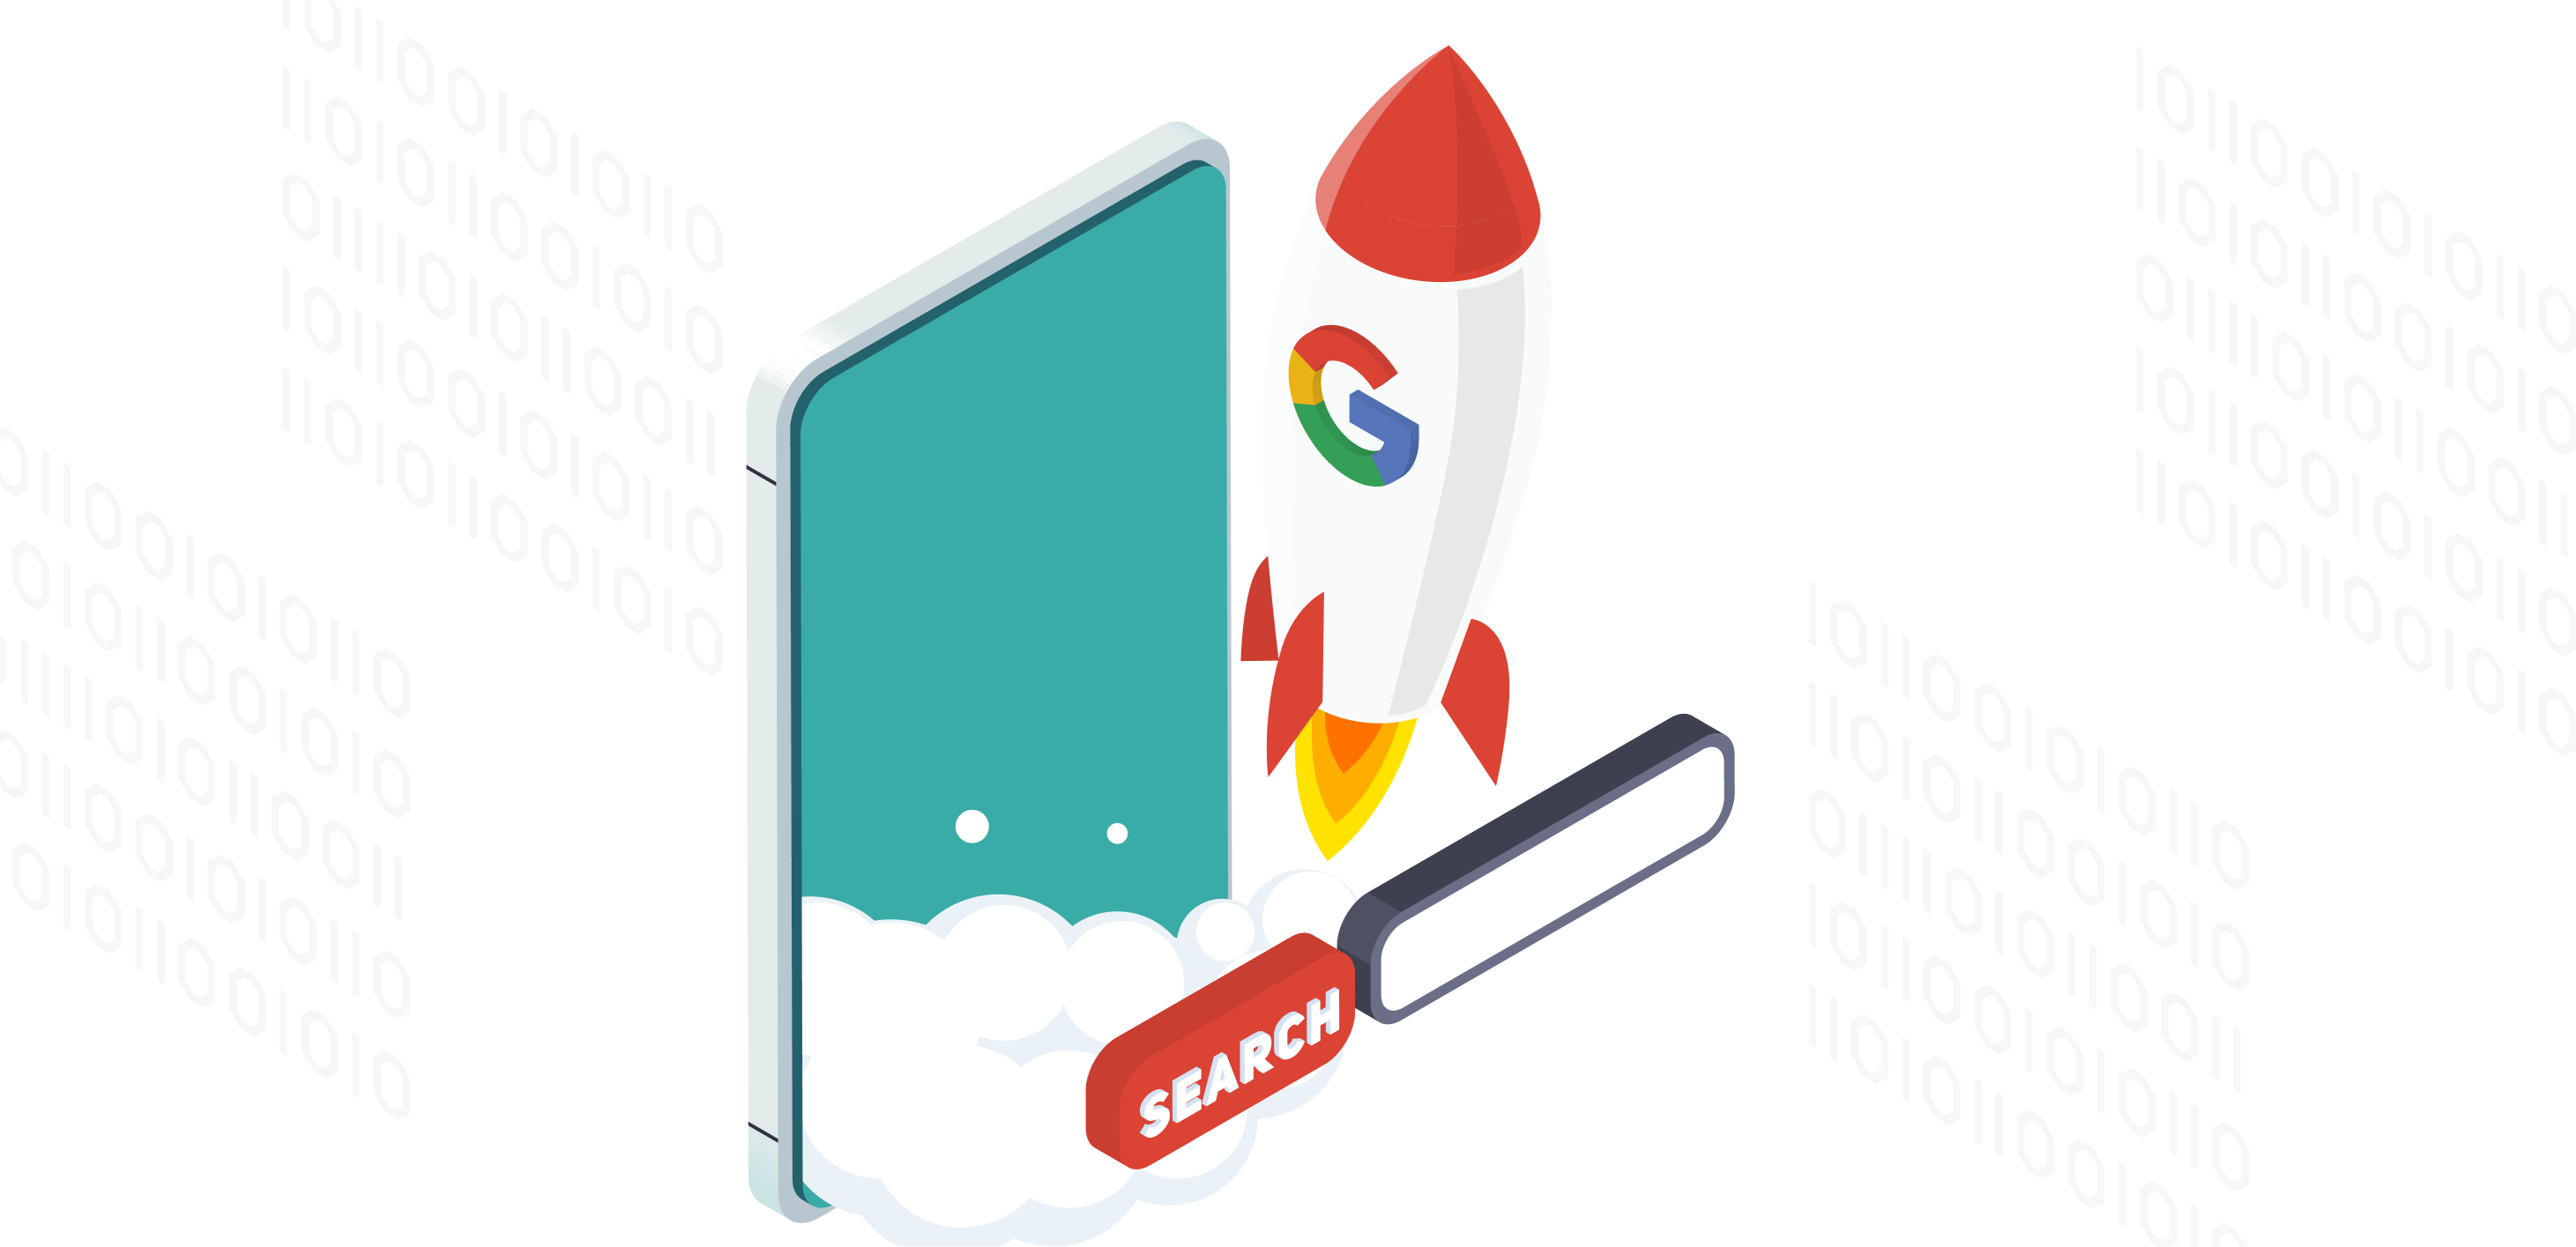 Rocket with google logo - graphics